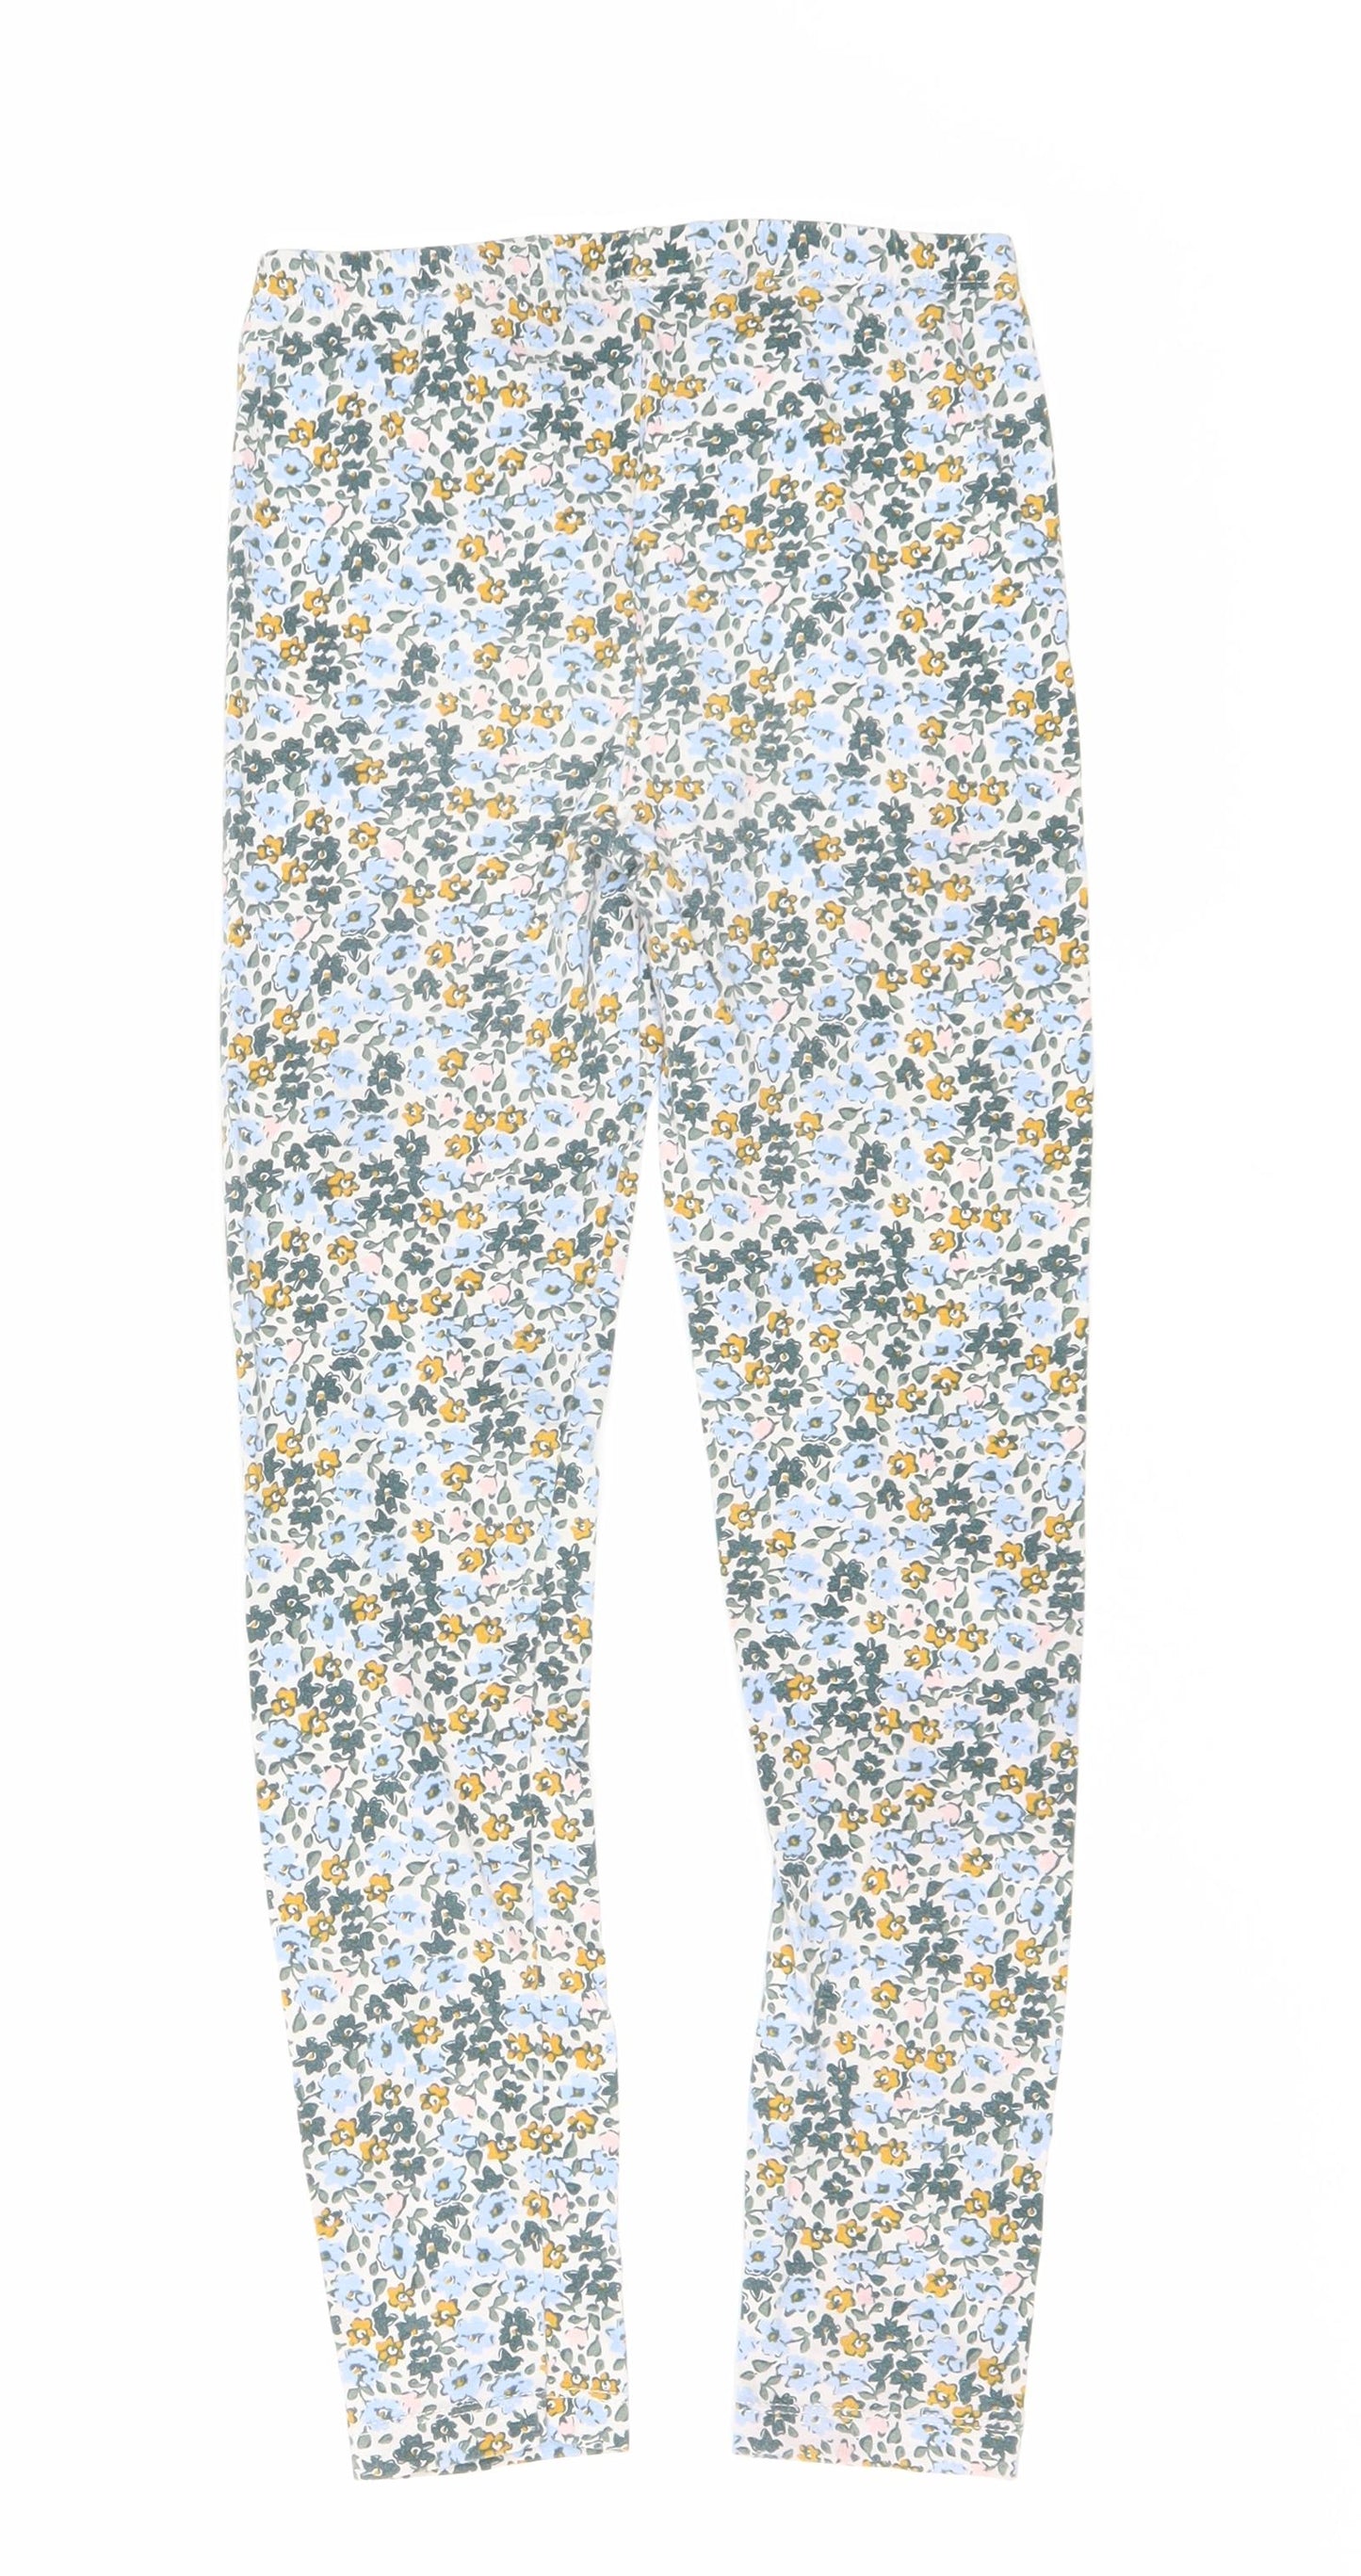 TU Girls Blue Floral Cotton Sweatpants Trousers Size 9 Months Regular Drawstring - Leggings